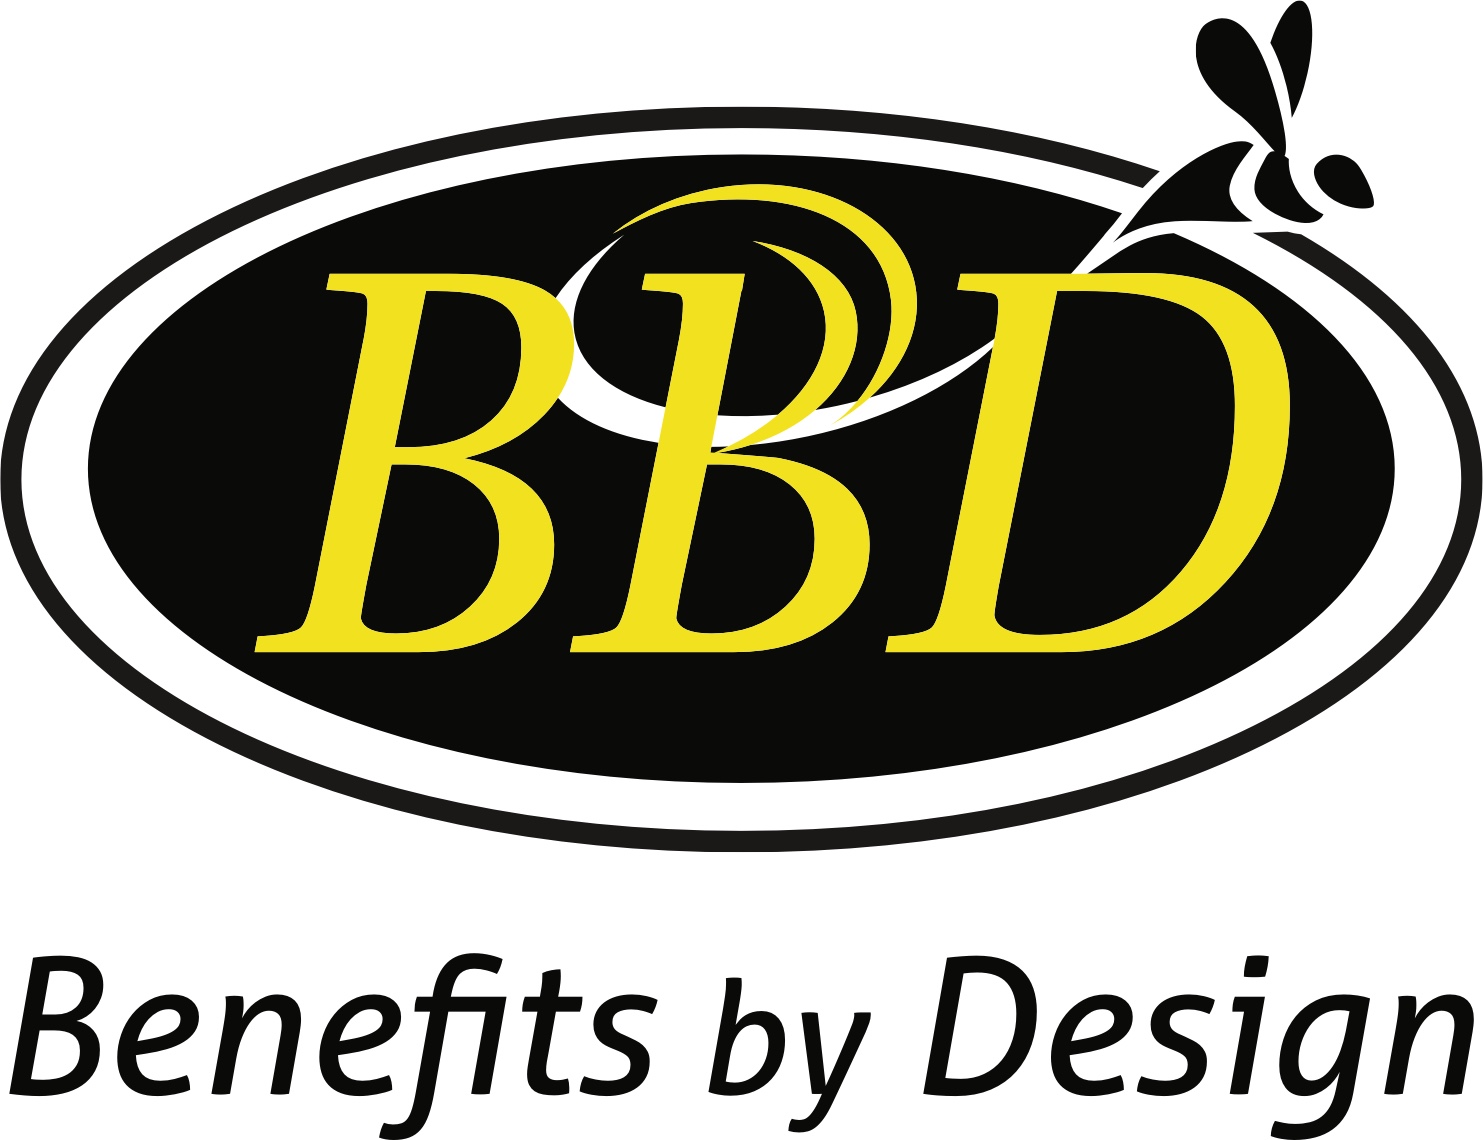 Benefits by Design